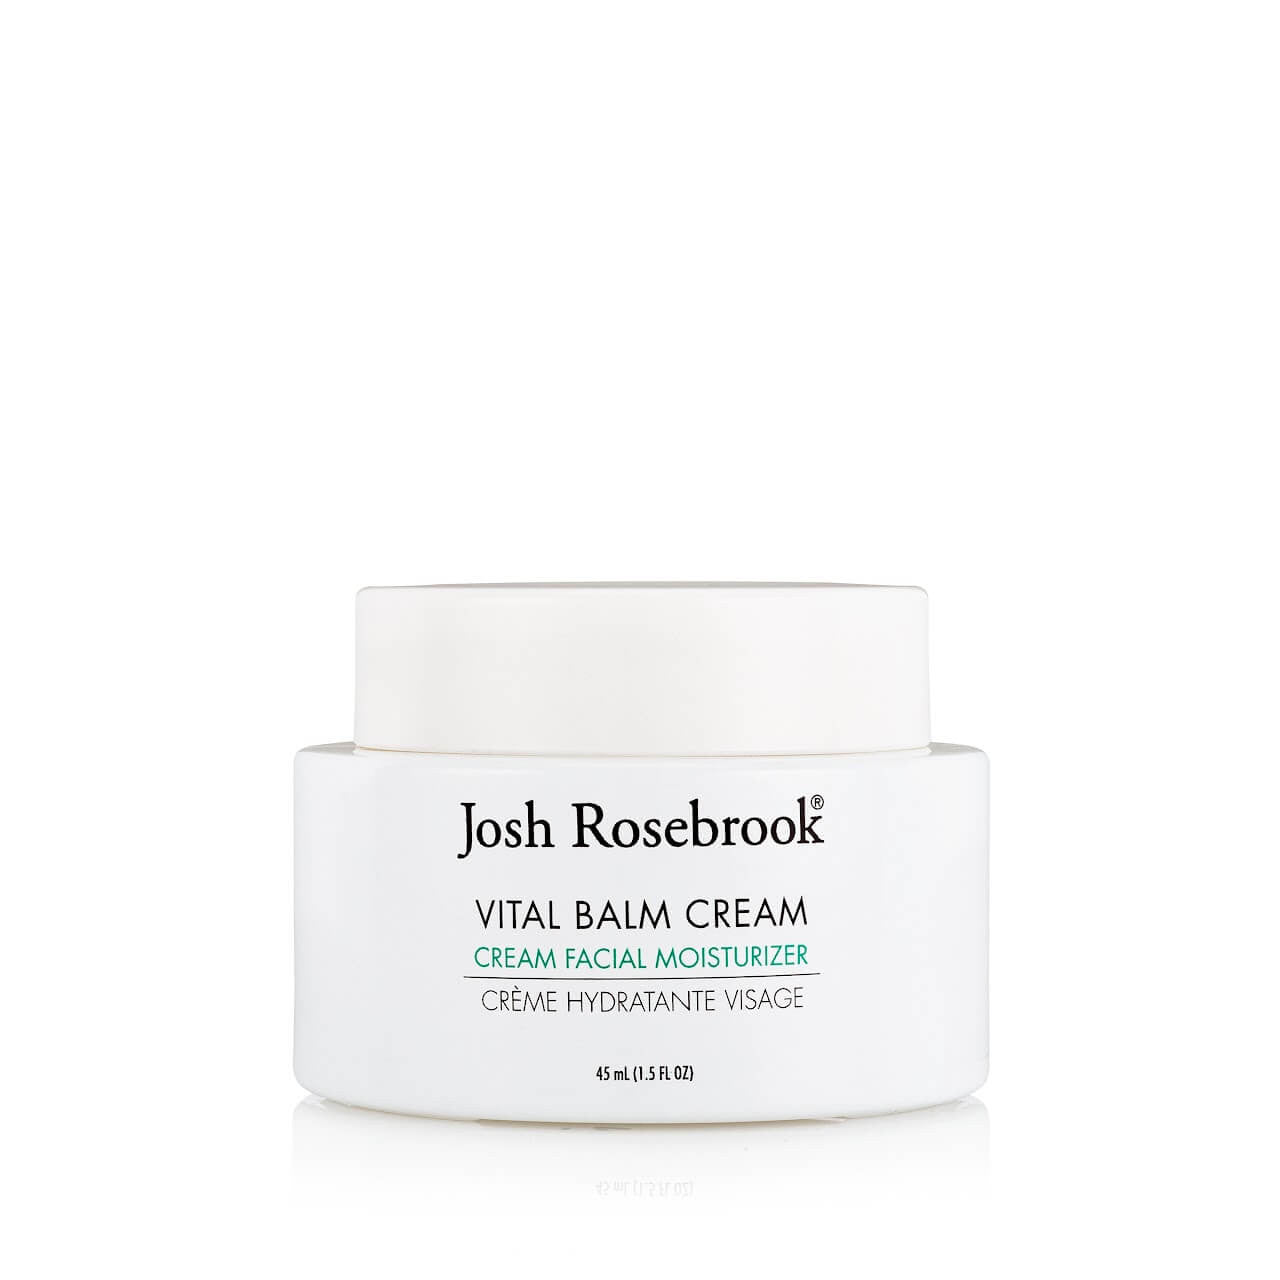 Josh Rosebrook Vital Balm Cream, Full Size 1.5oz